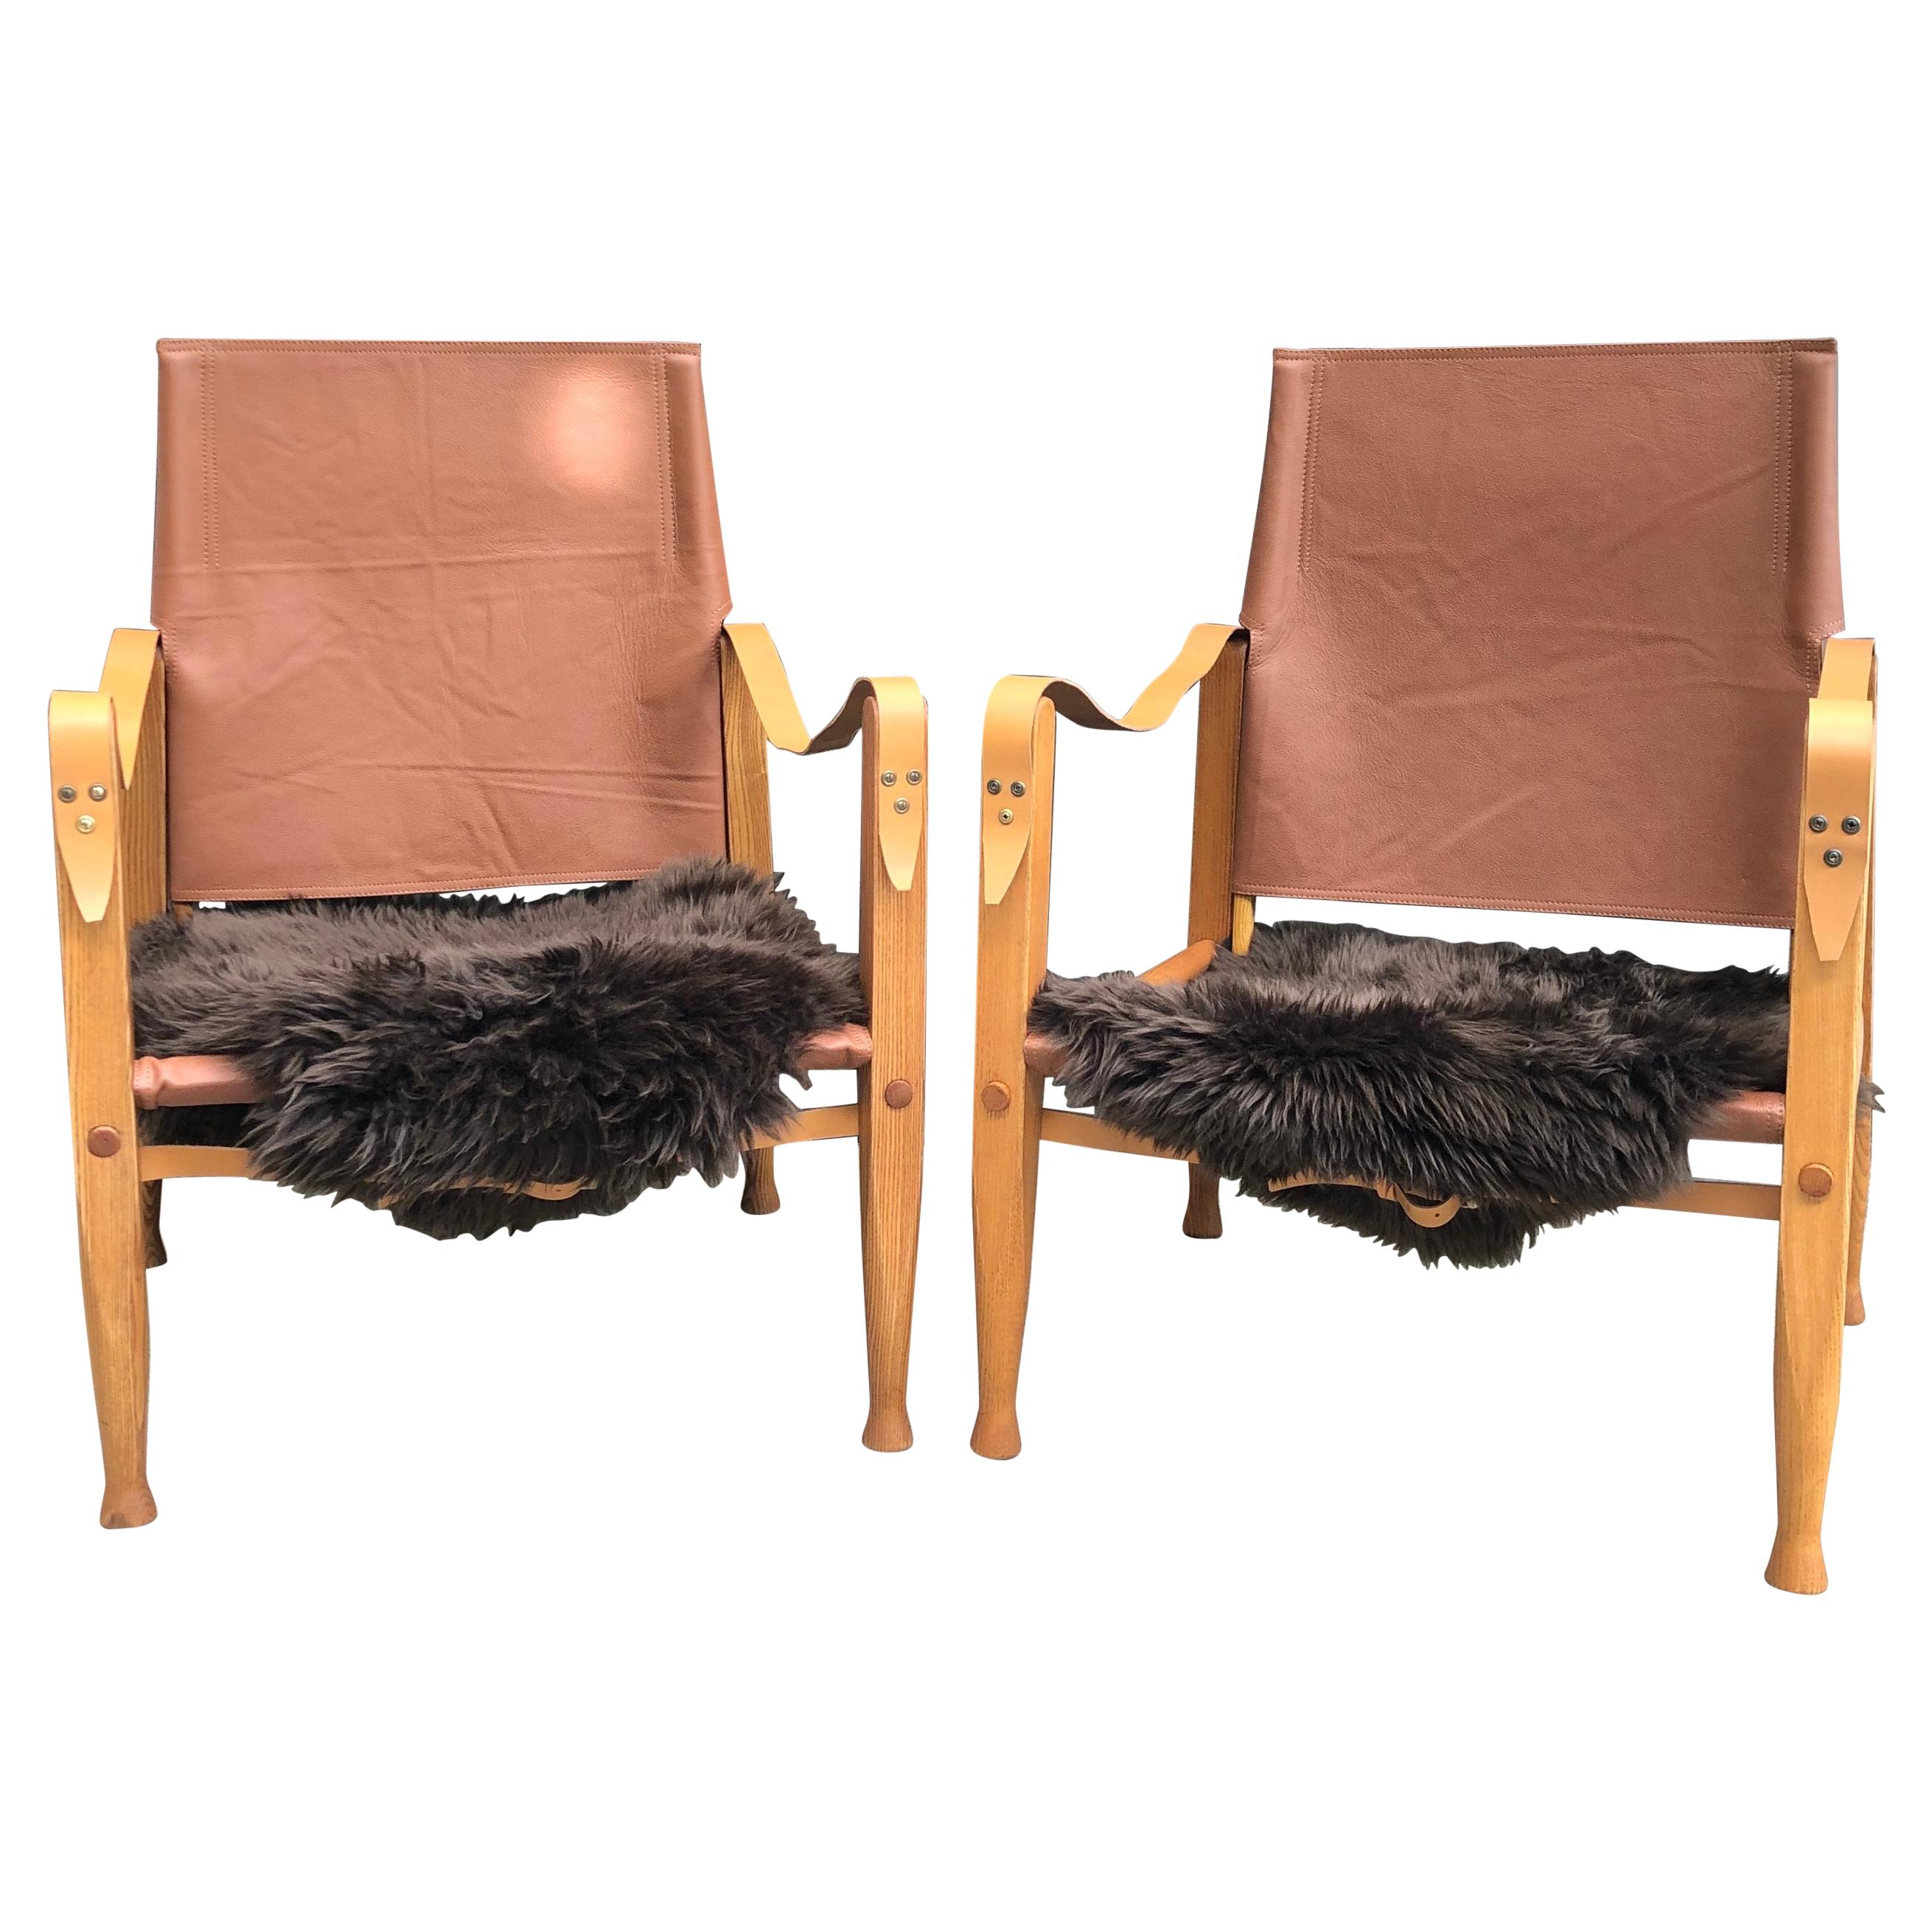 Pair of Vintage Refurbished Kaare Klint Safari Chairs from the 1960s